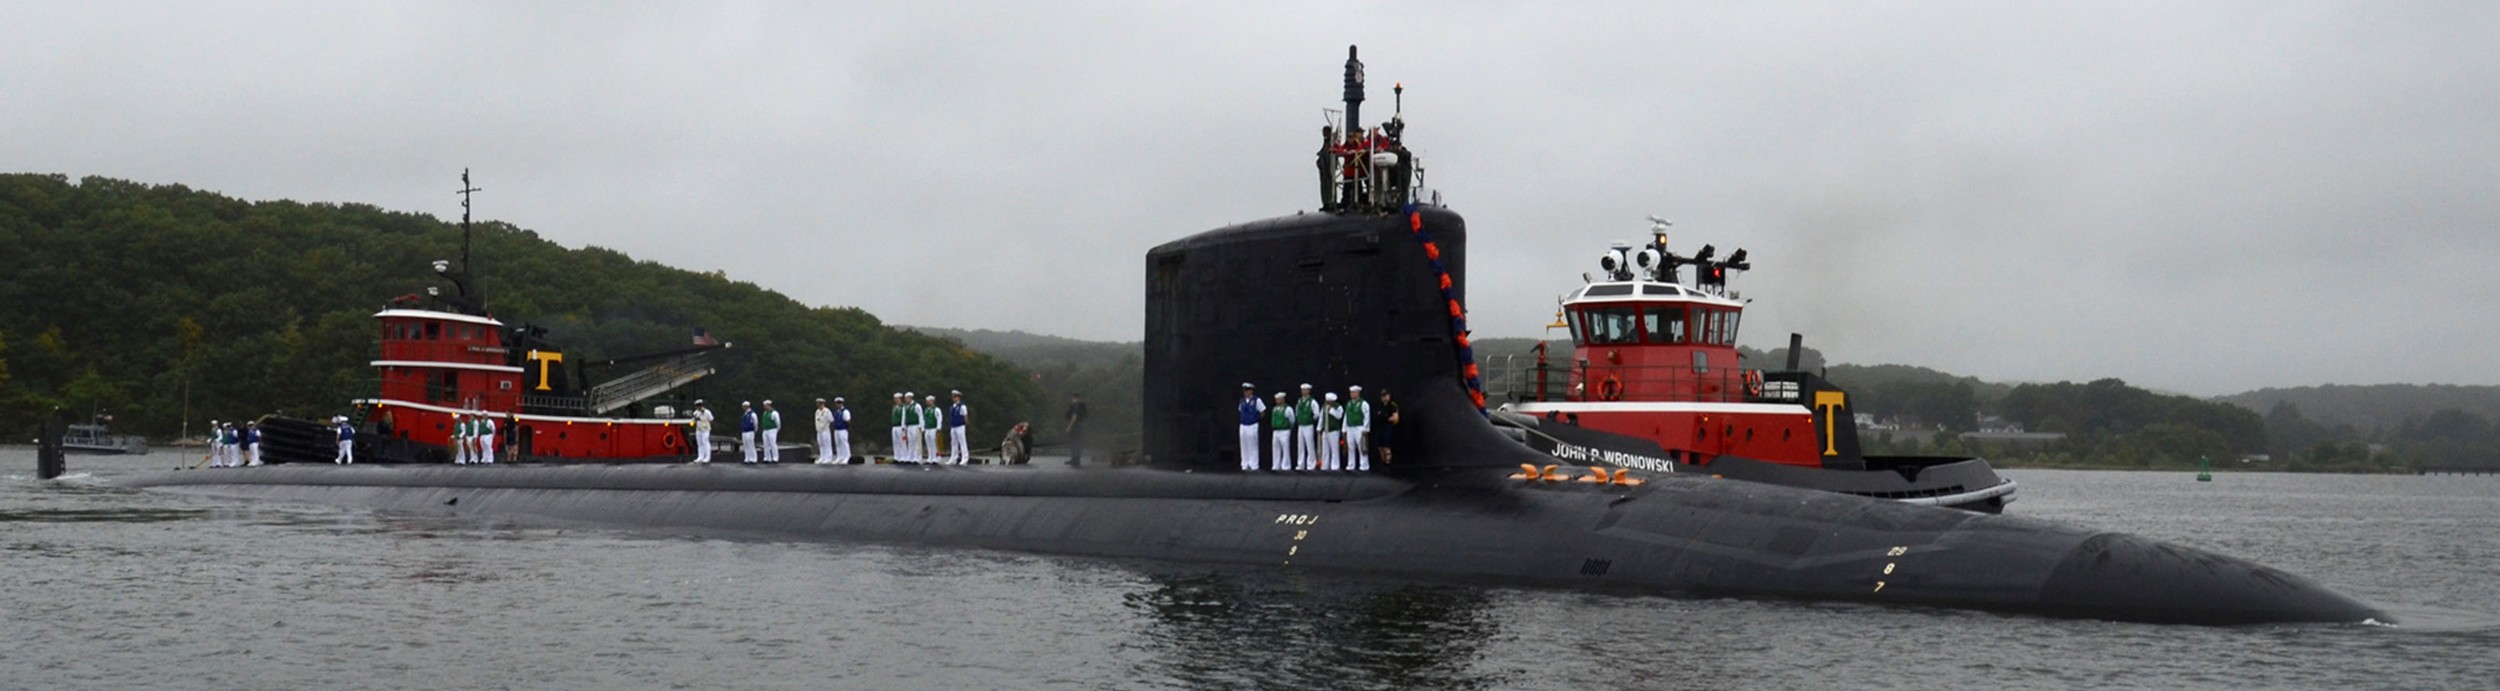 ssn-778 uss new hampshire virginia class attack submarine us navy 03 new london groton connecticut